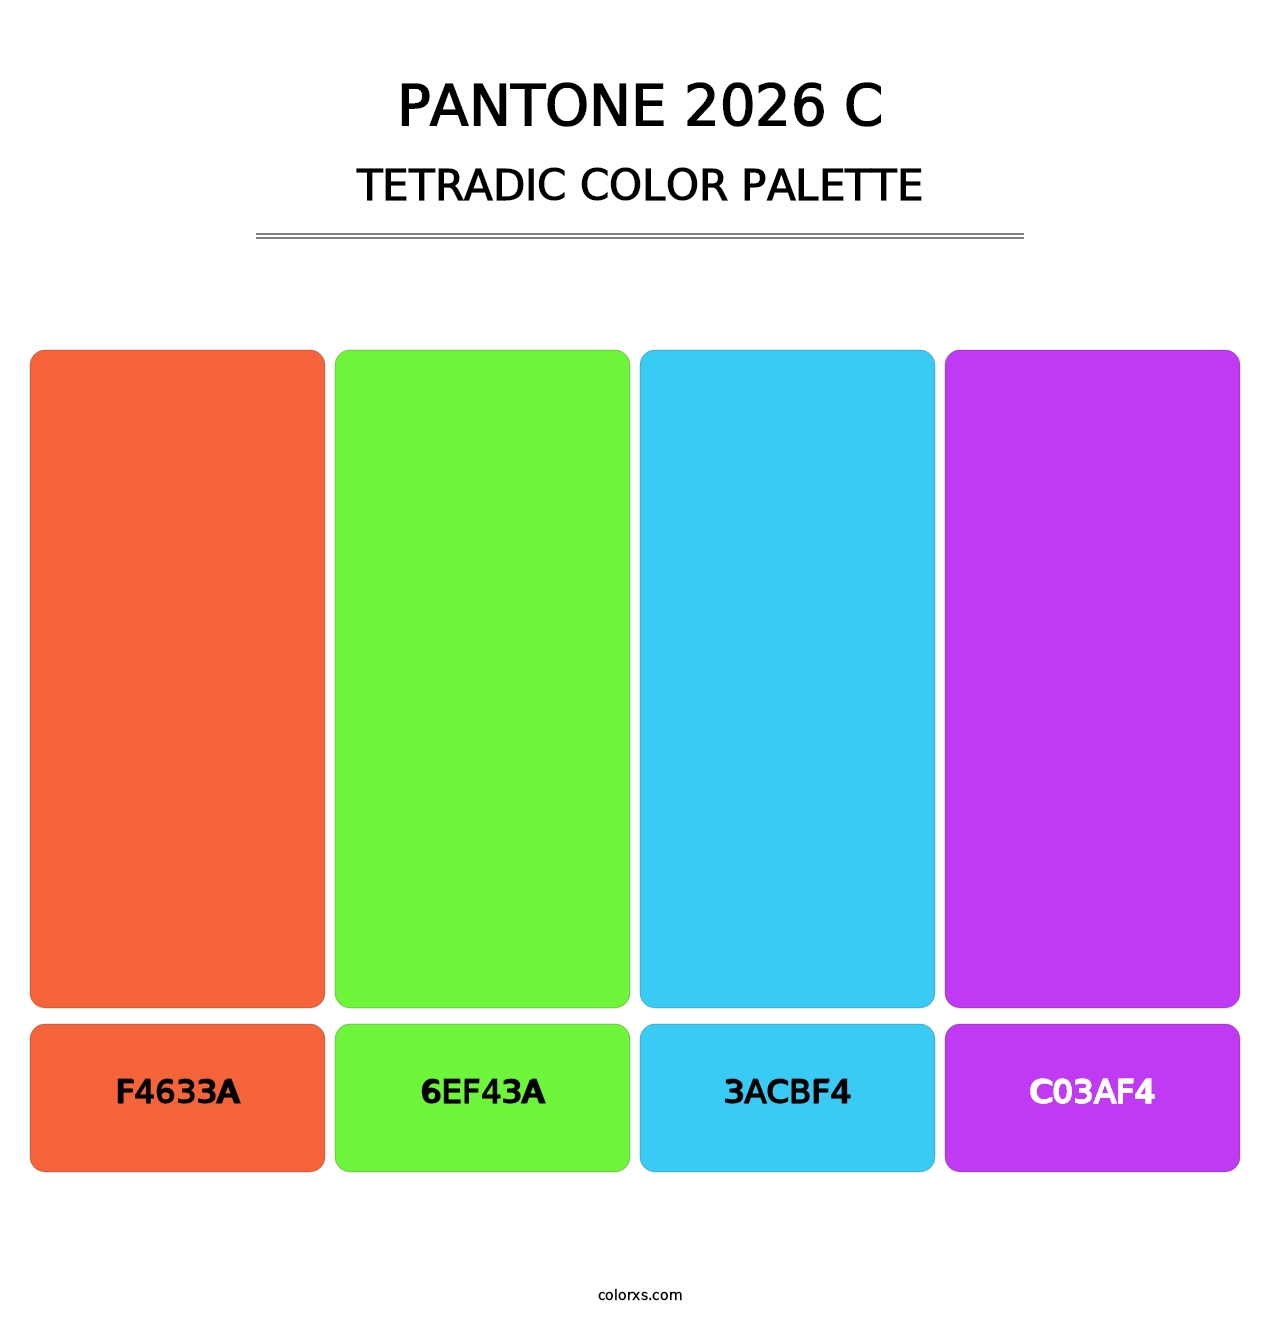 PANTONE 2026 C - Tetradic Color Palette